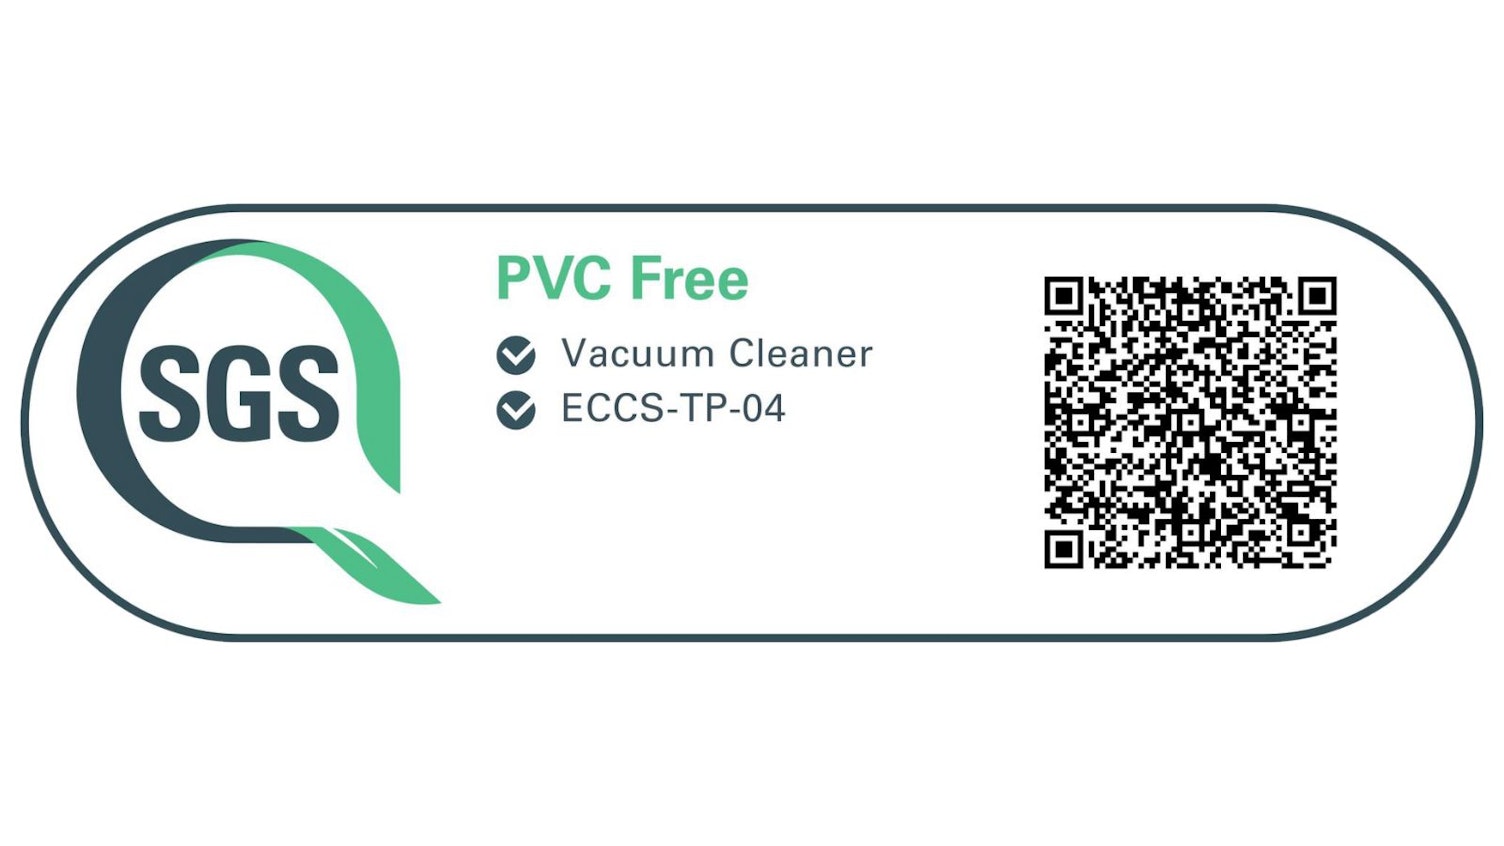 SGS PVC free Green Mark